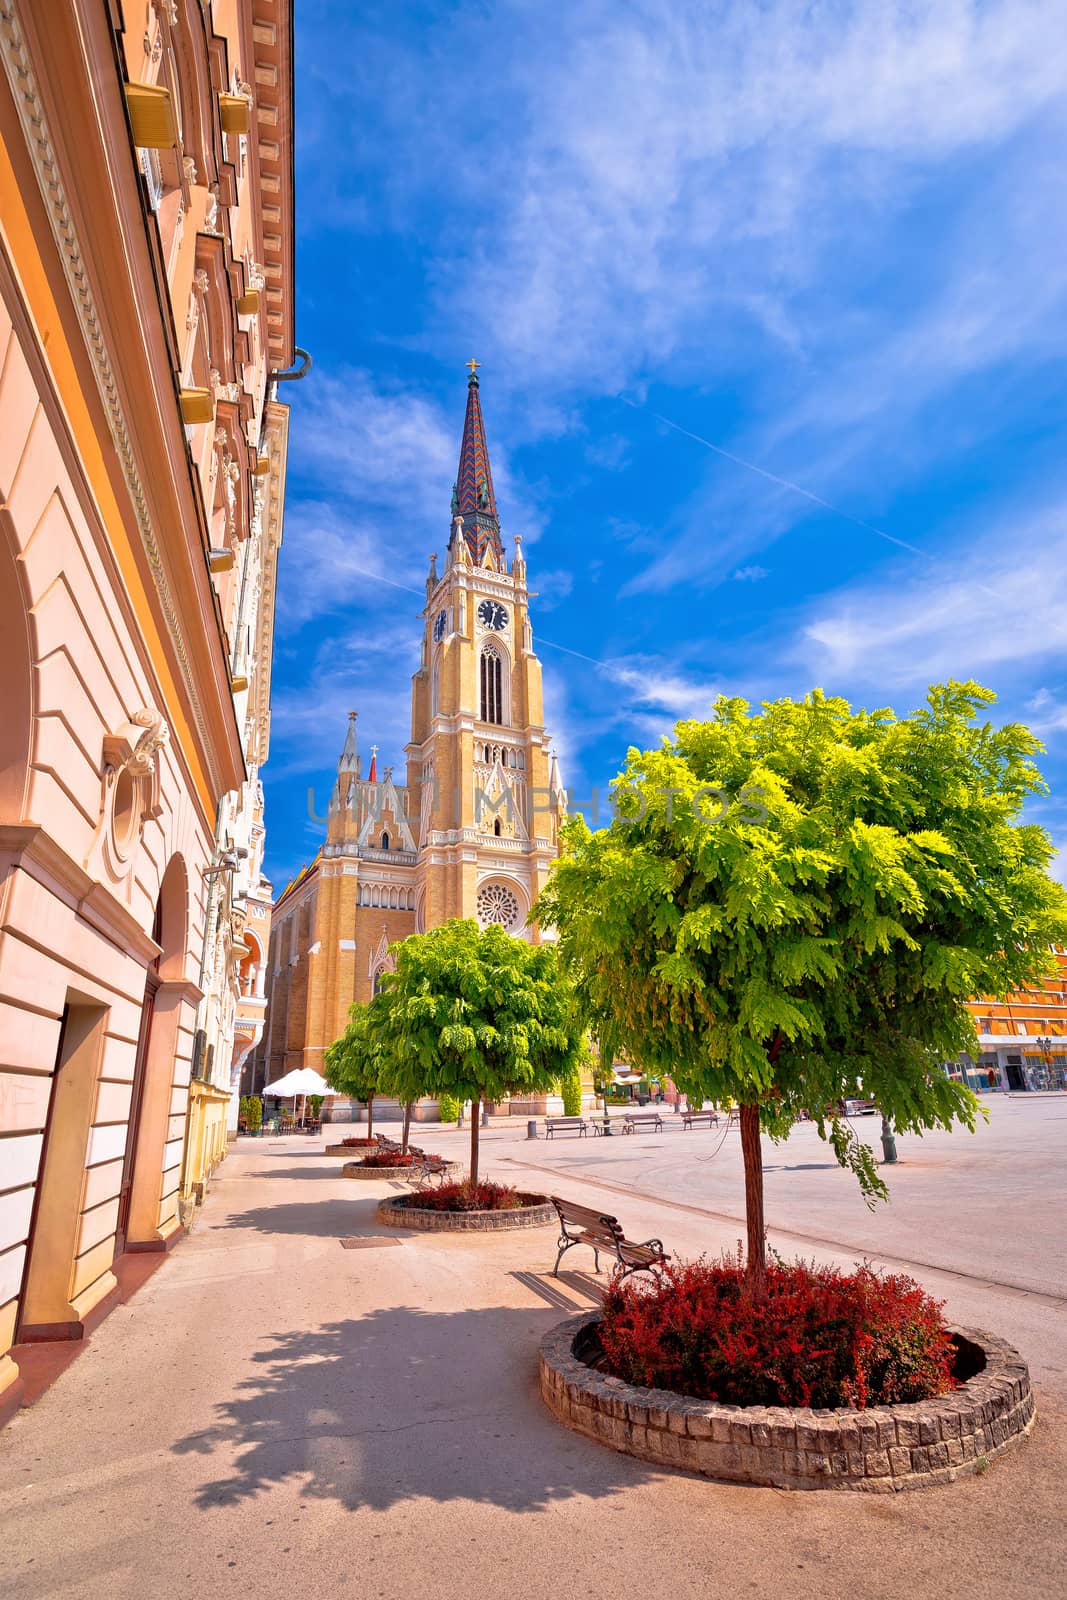 Novi Sad square and cathedral colorful view, Vojvodina region of Serbia